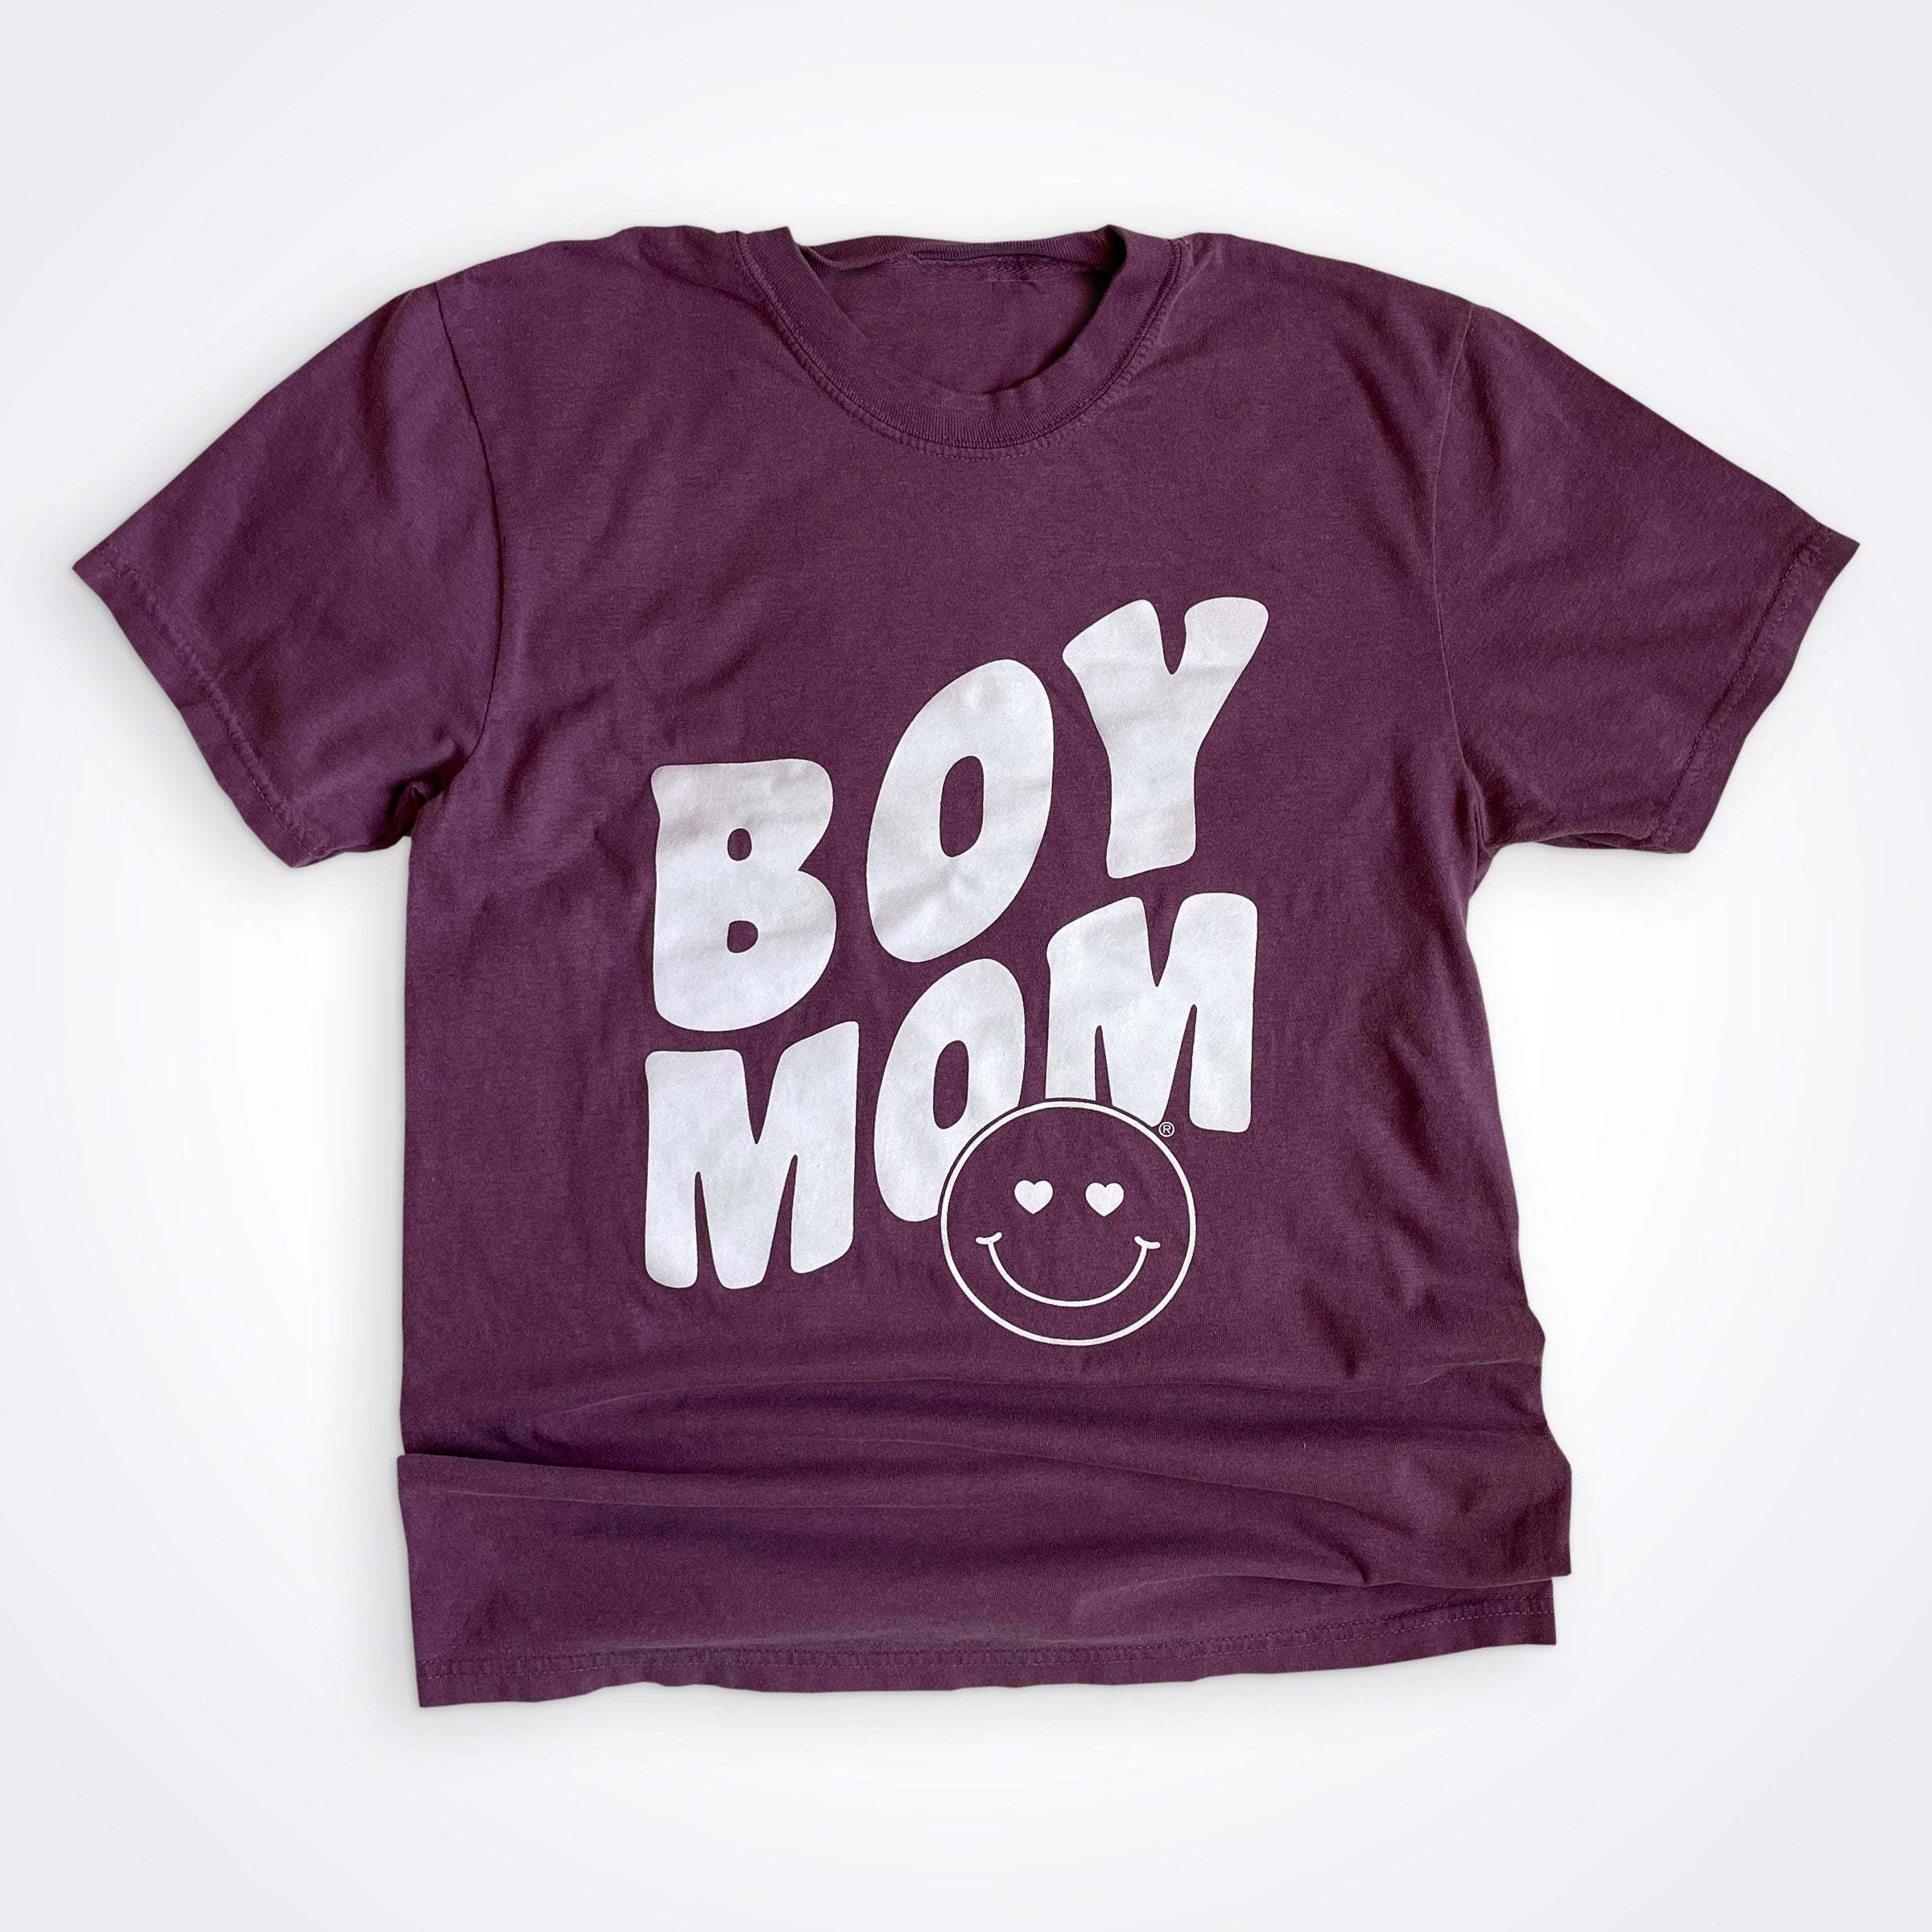 Boymom® Heart Eyes Shirt in Berry Color